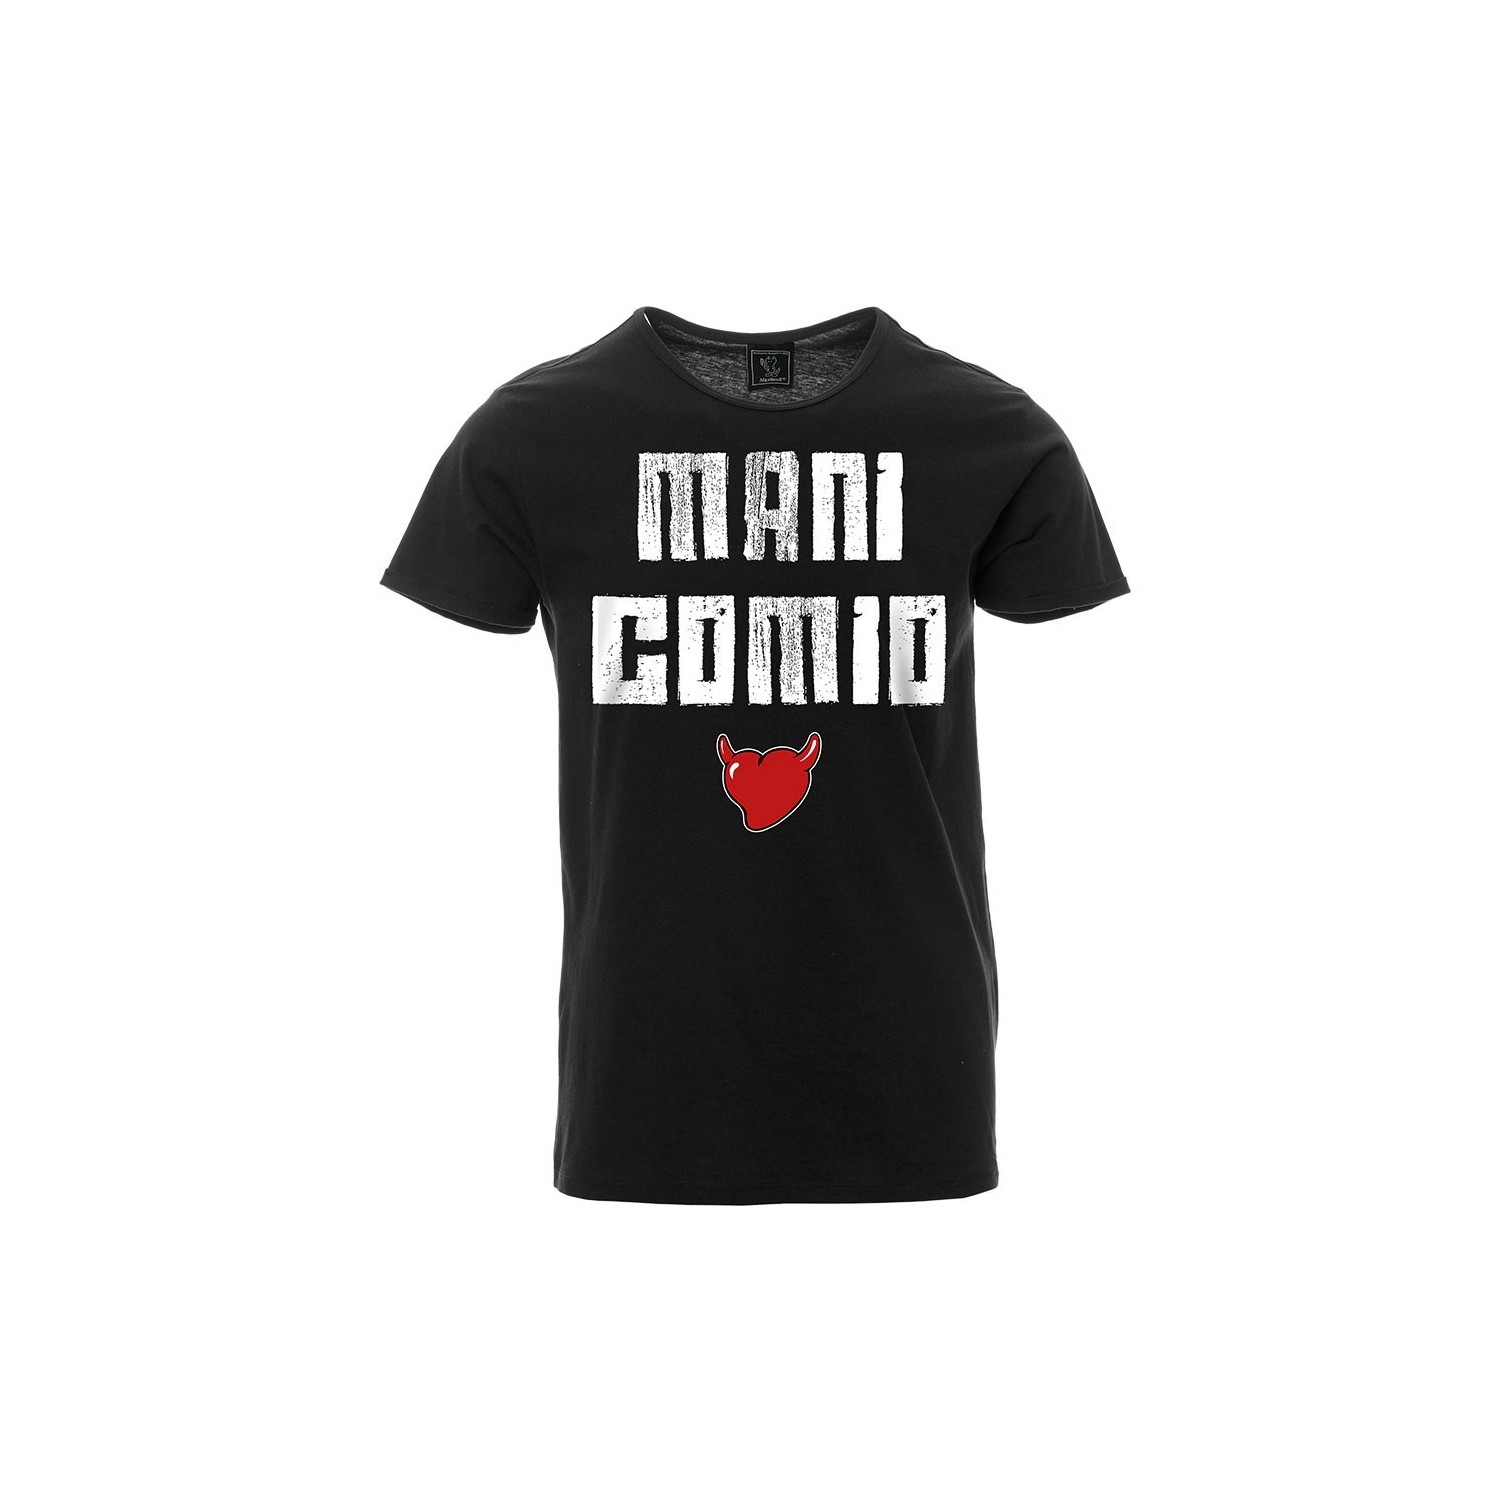 T-shirt unisex MANICOMIO